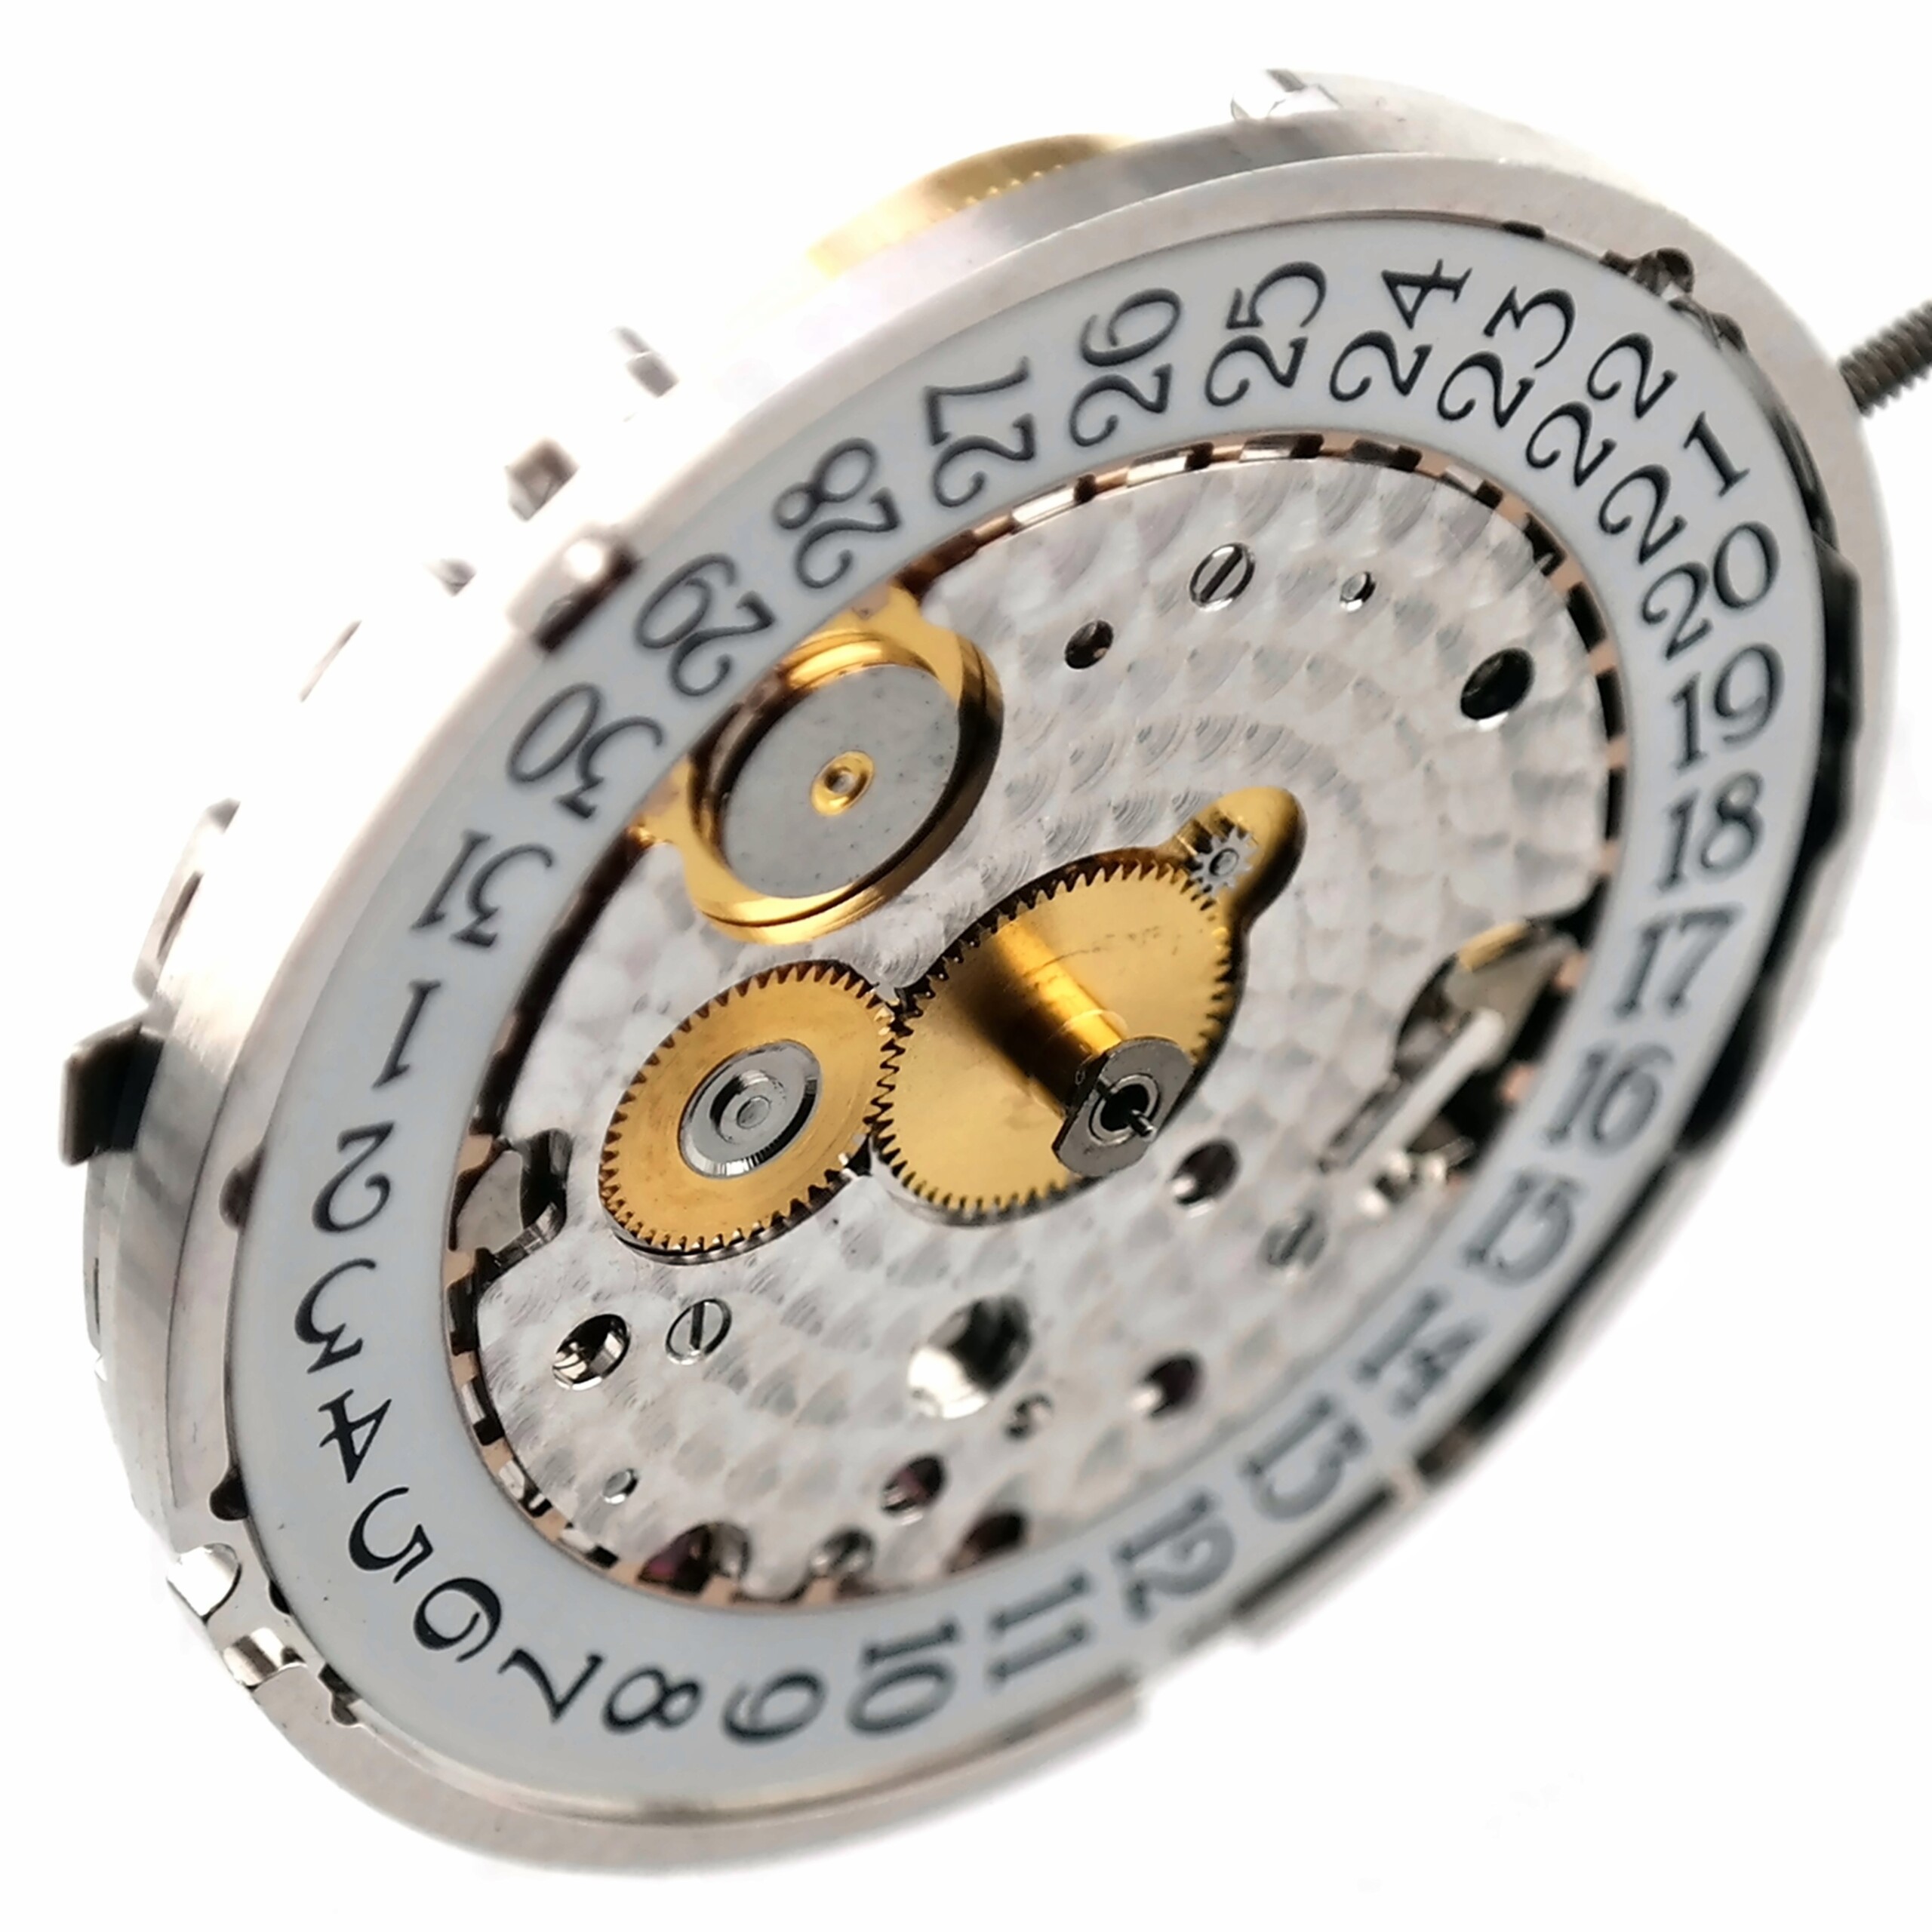 chopard automatic chronometer watch movement calibre fe 001